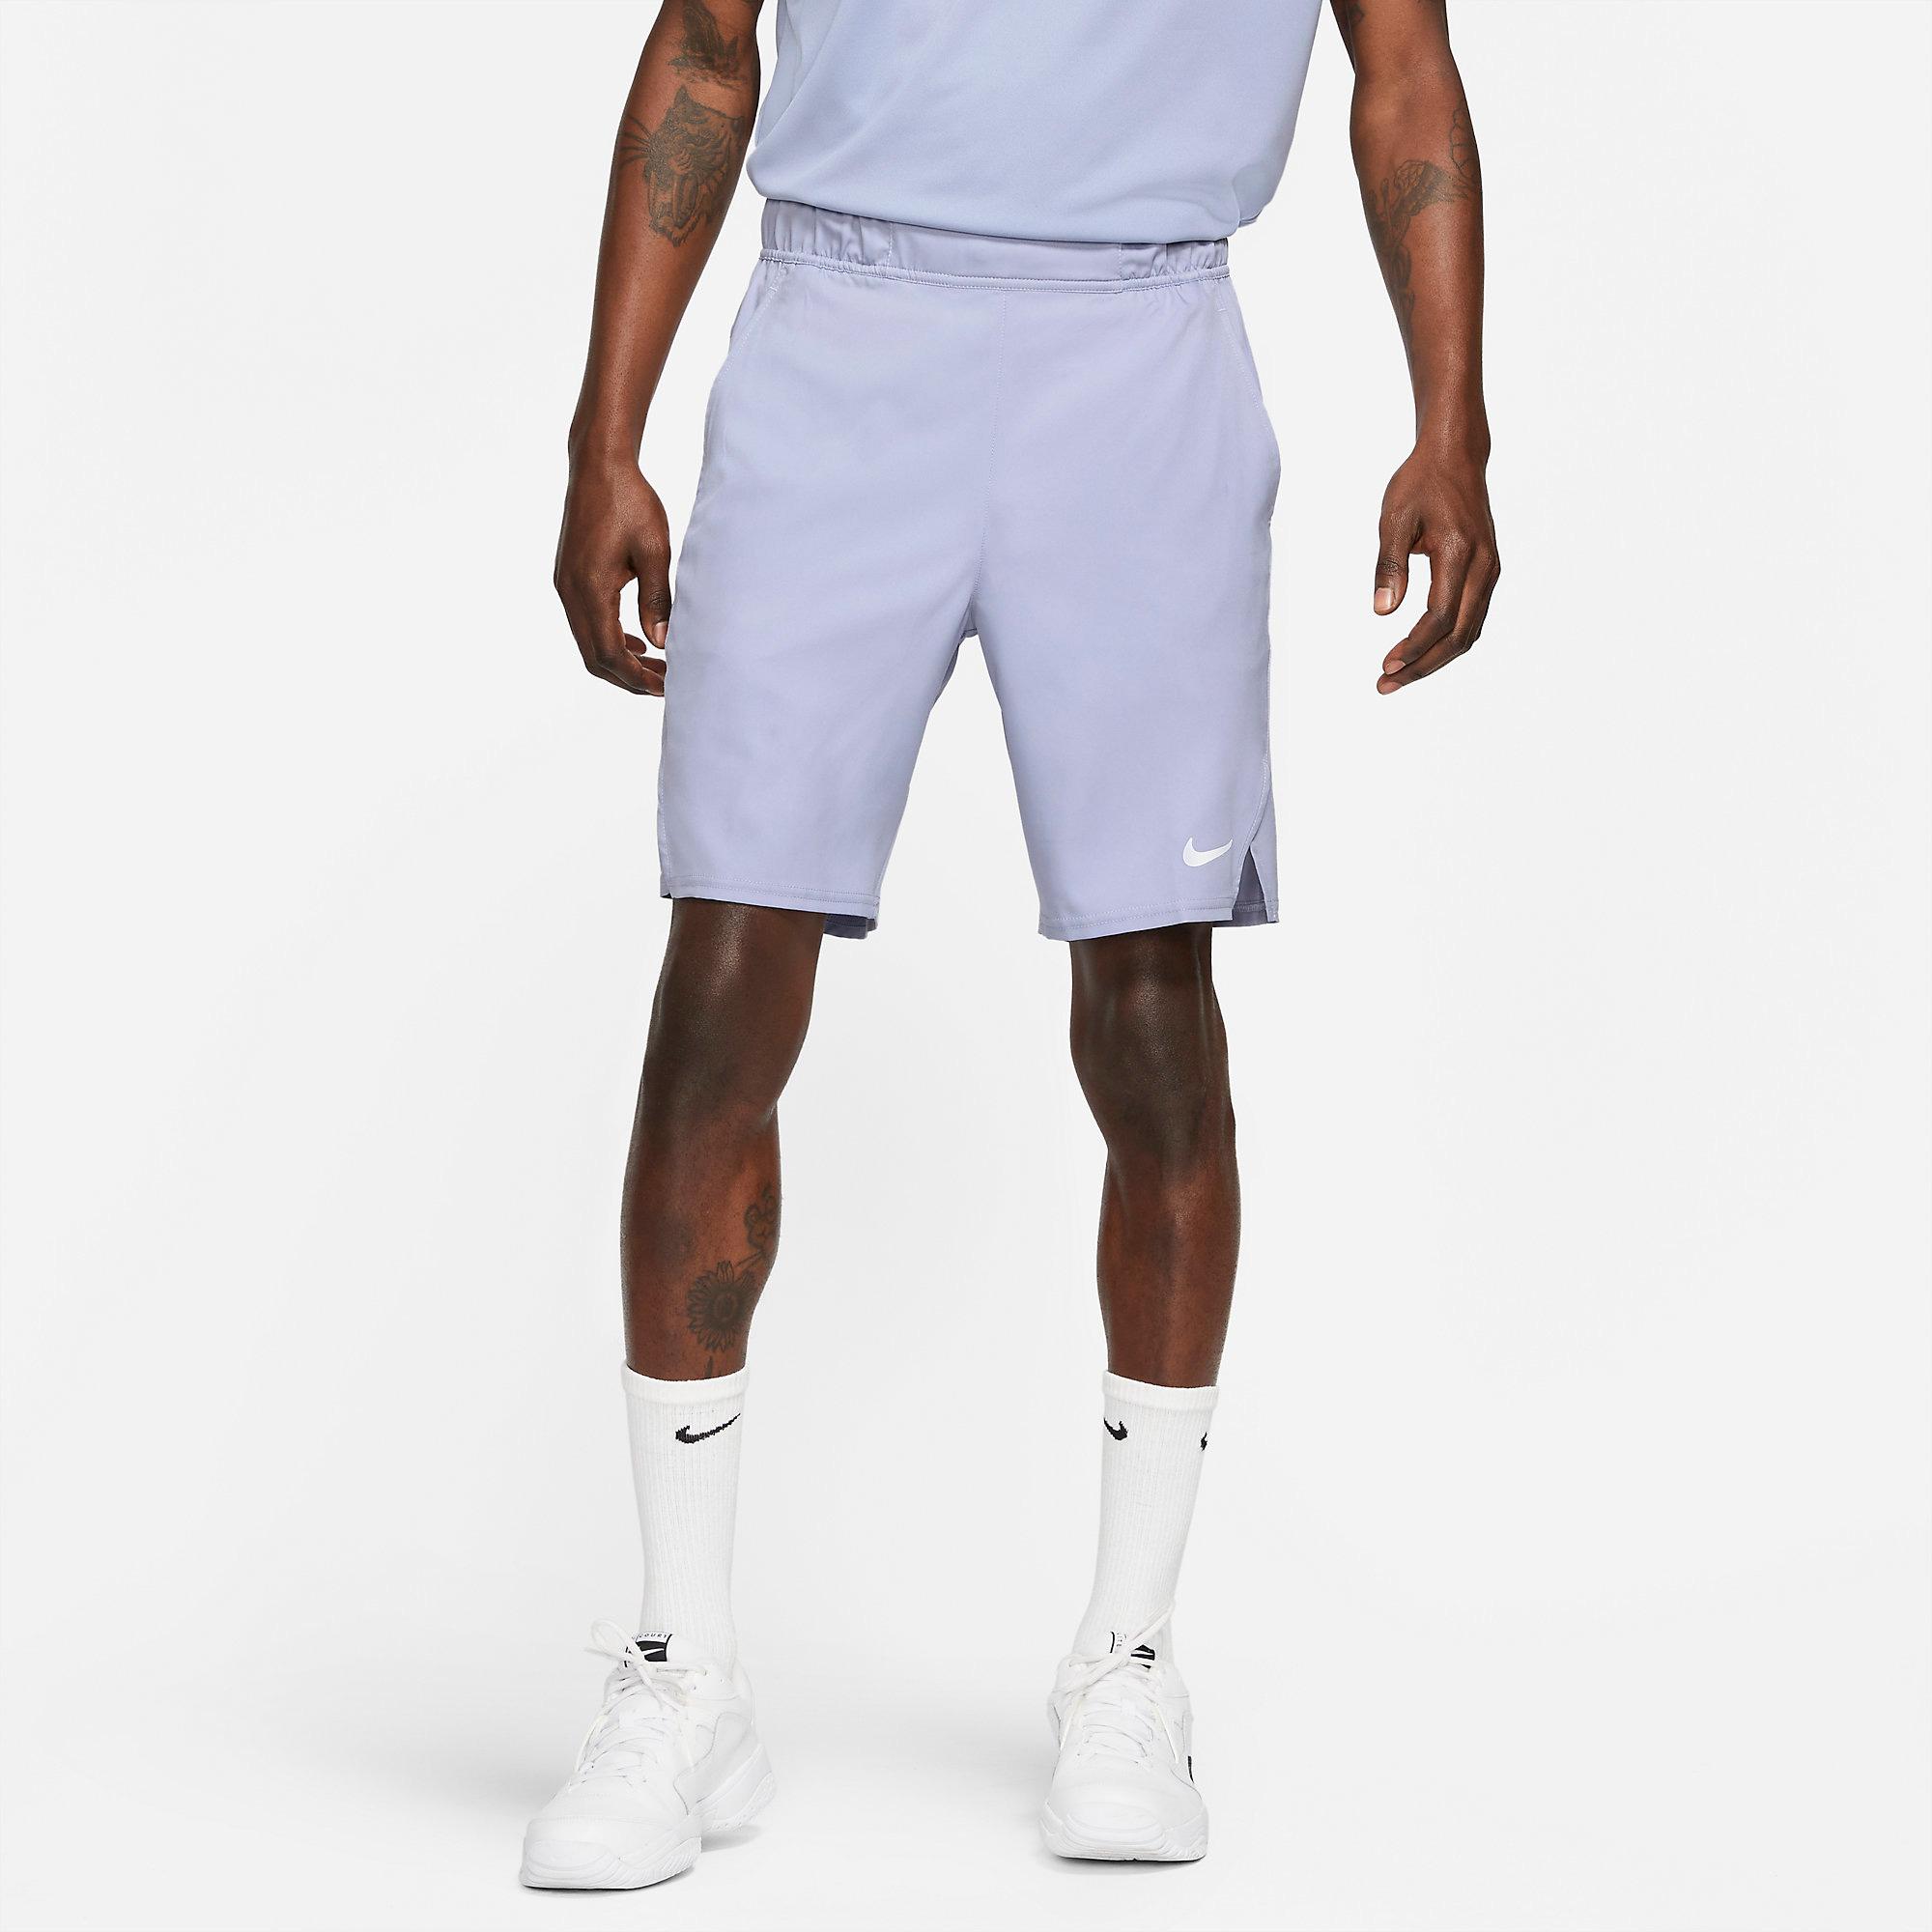 Nike Mens Victory 9 Inch Tennis Shorts - Light Blue - Tennisnuts.com